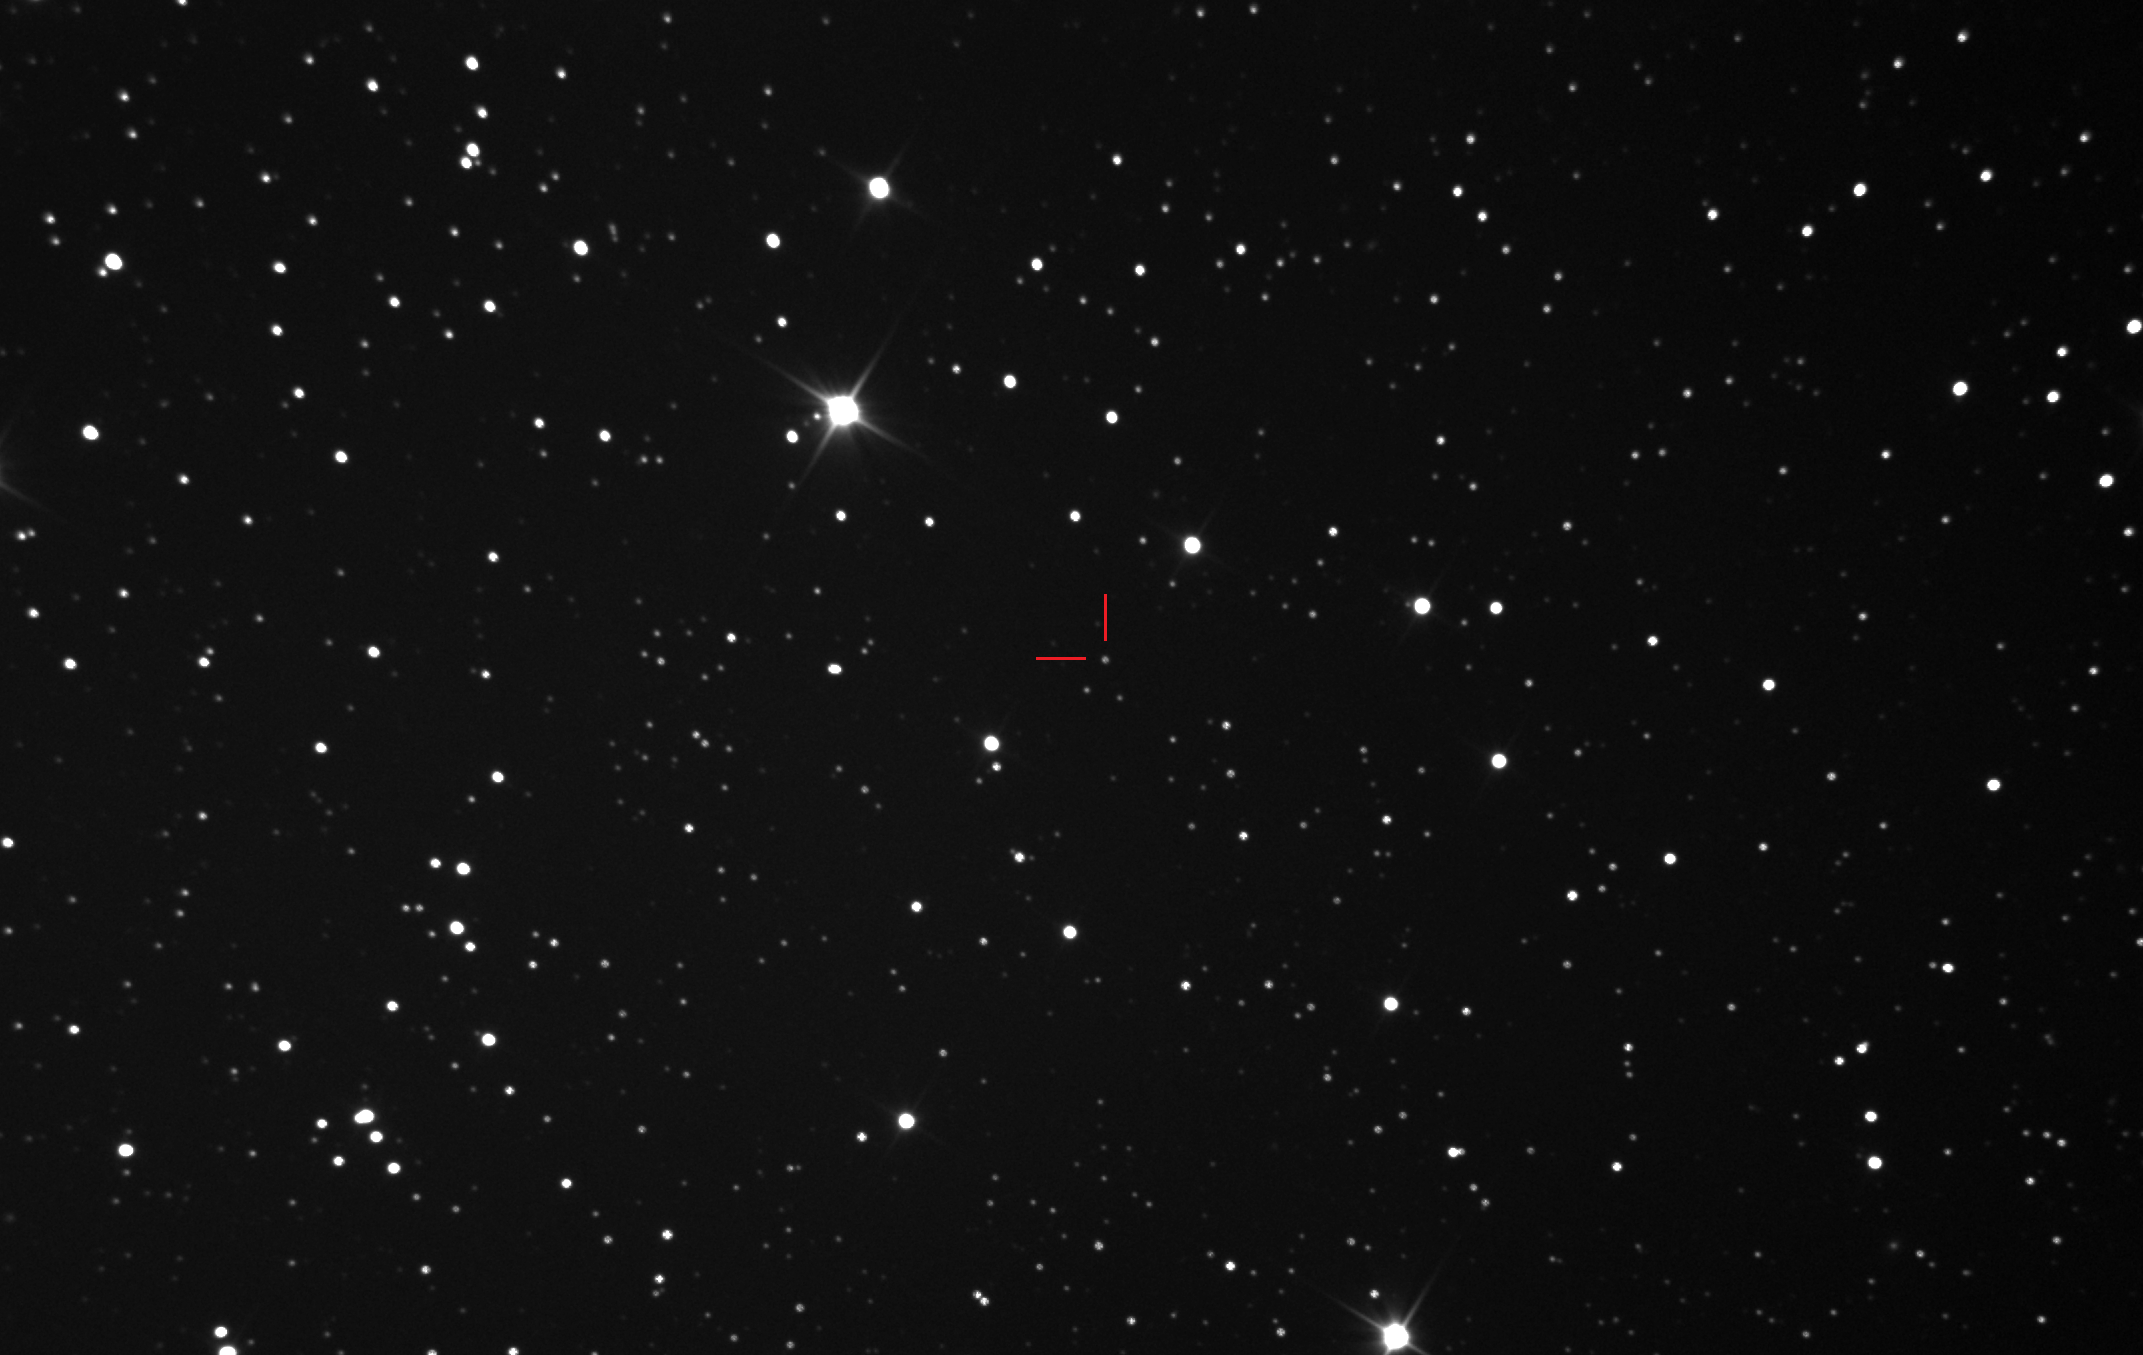 Quasar S5 0014+81